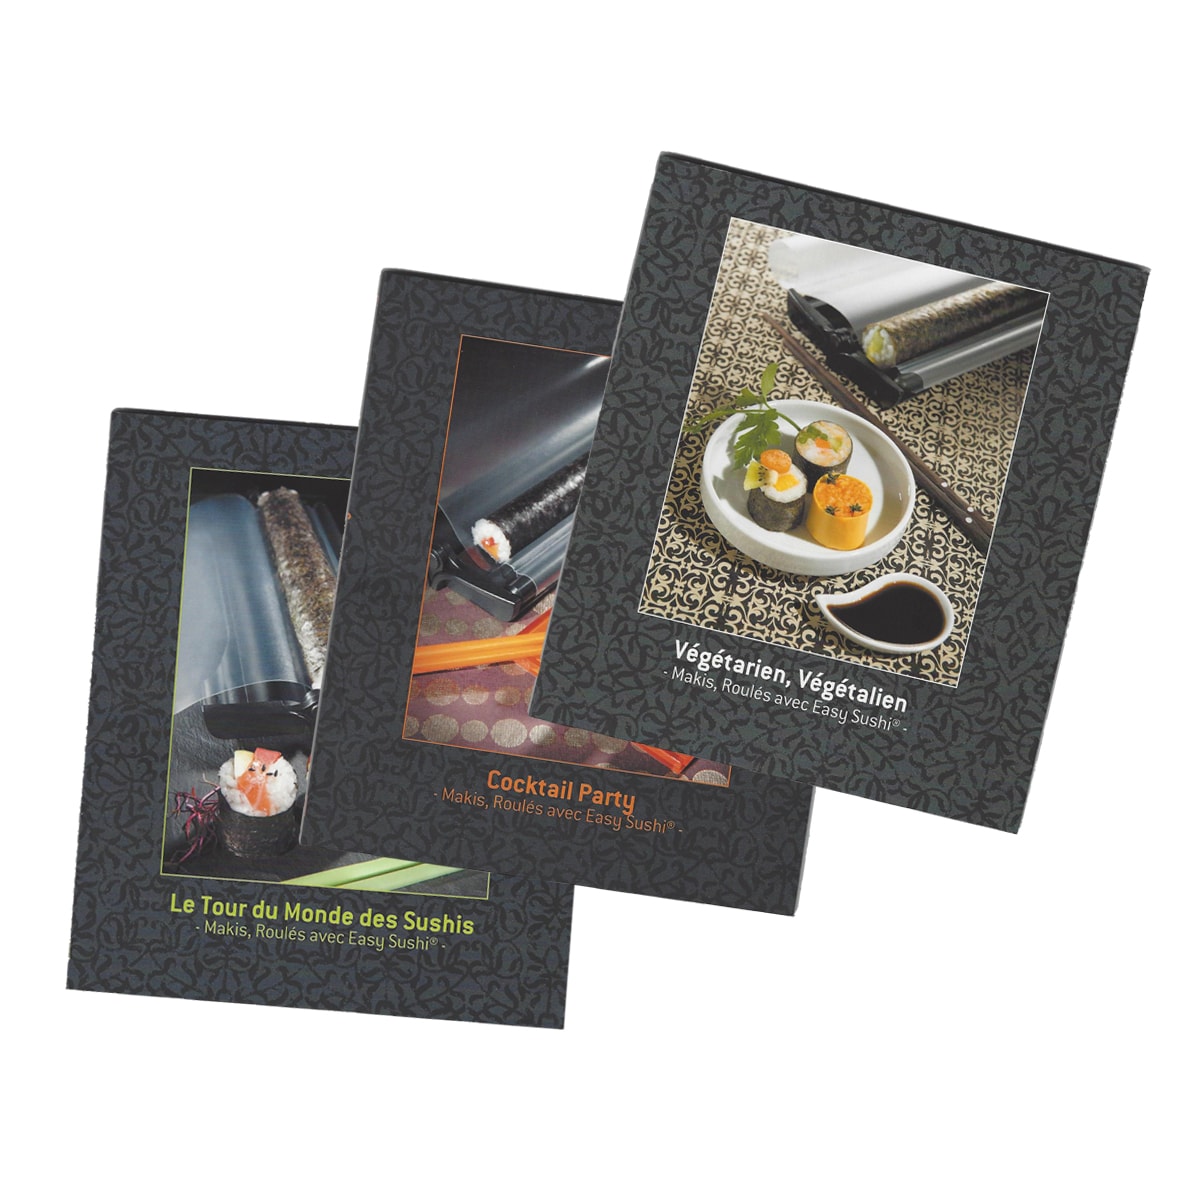 Easy-Sushi-pack-3-Books